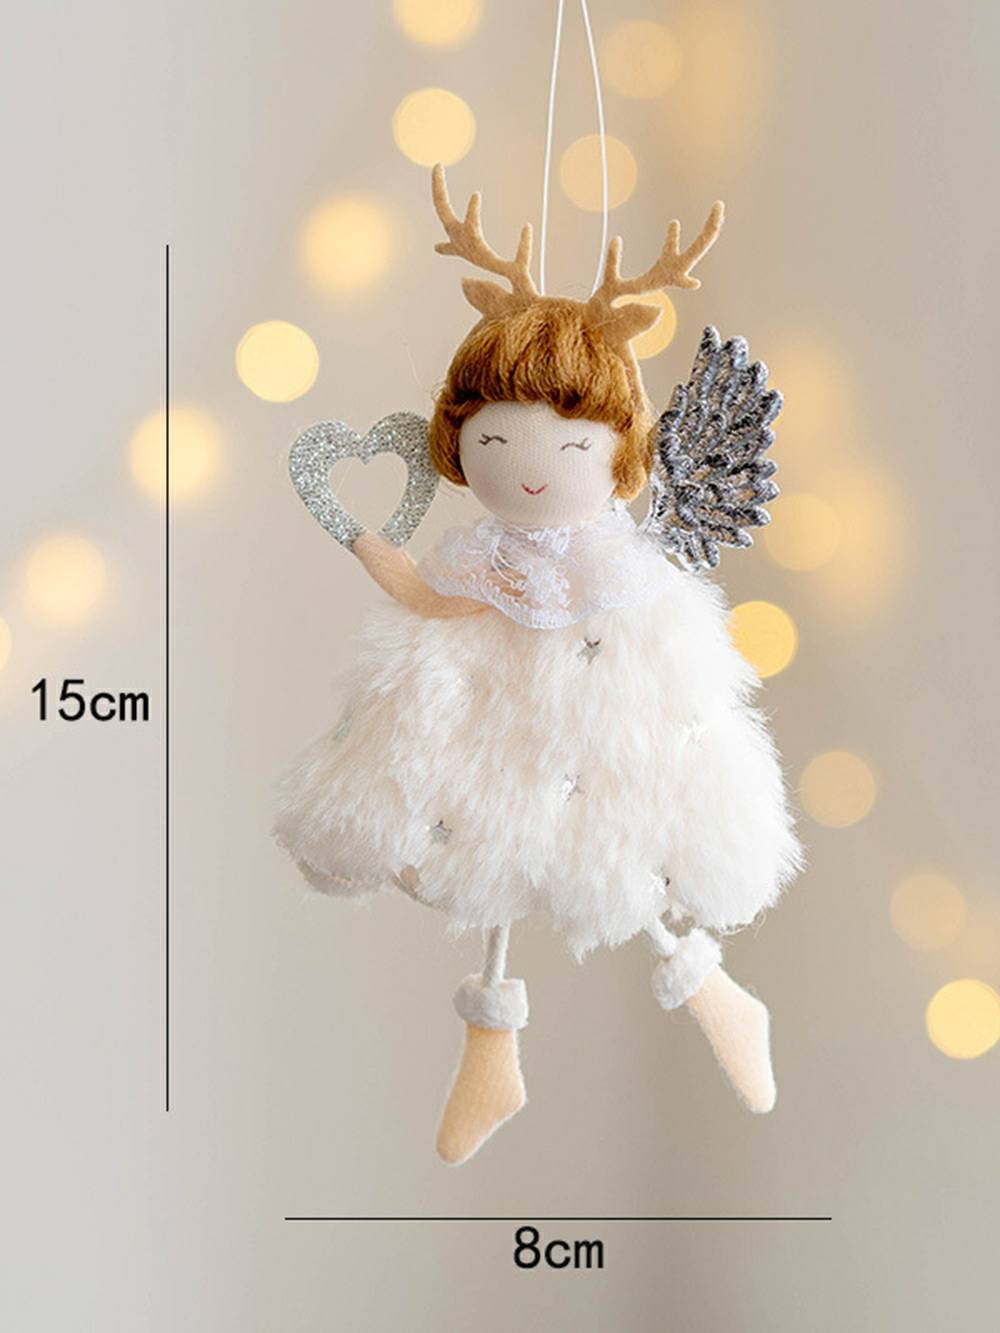 Enchanting Handmade Christmas Fairy Wee Doll Ornament